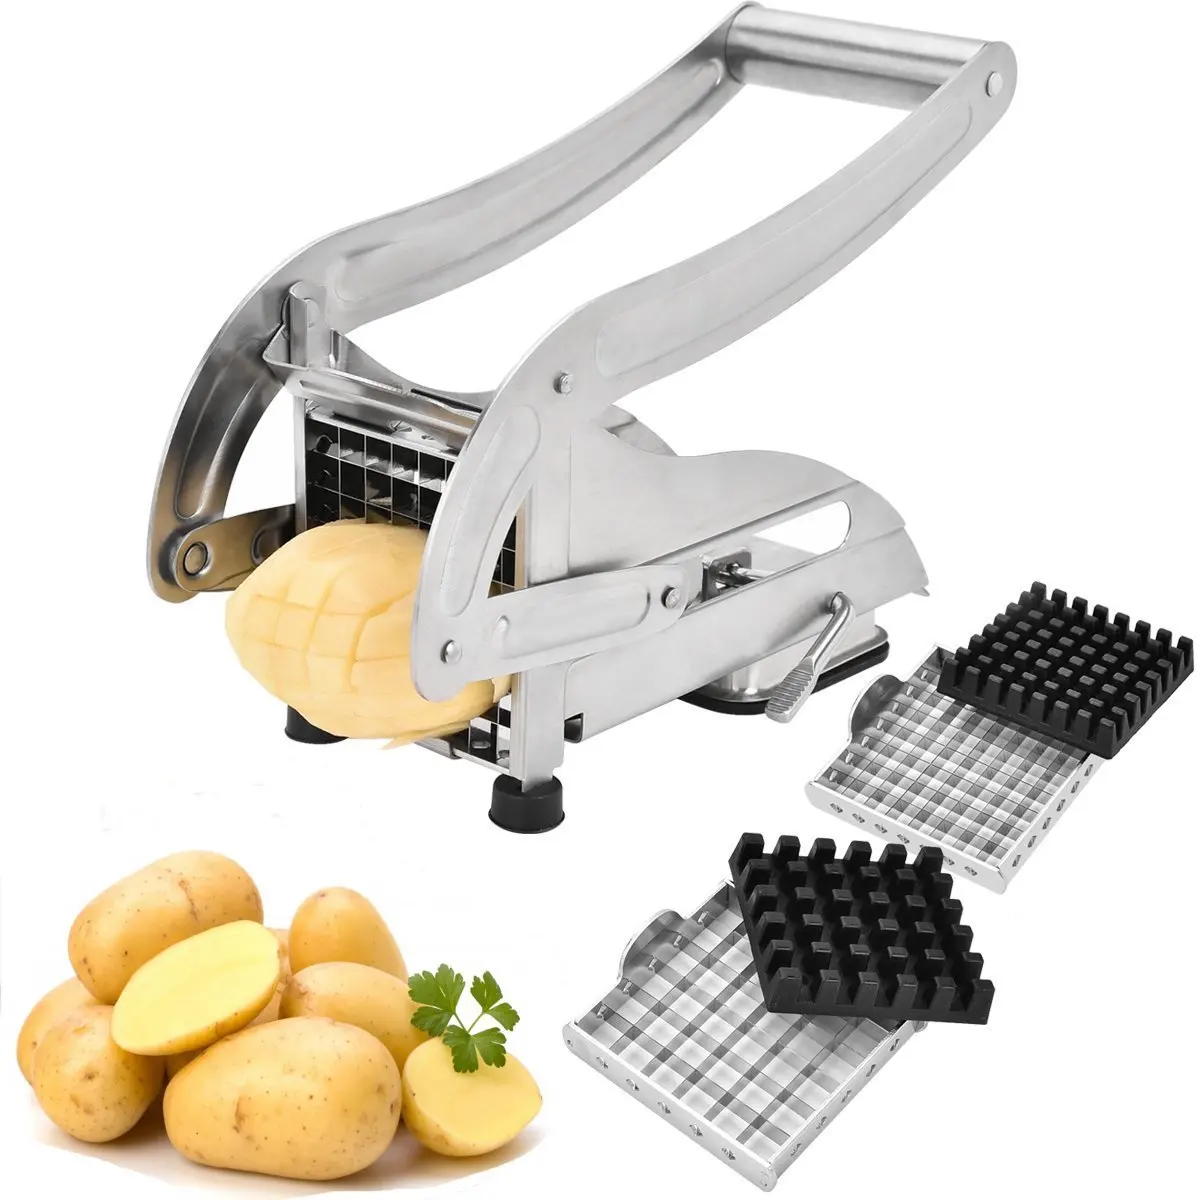 

Potato Chipper French Fries Cutter Stainless Steel Potato Slicer Chopper Maker Cutter Fruit Veg Potato with 2 Size Interchangeab